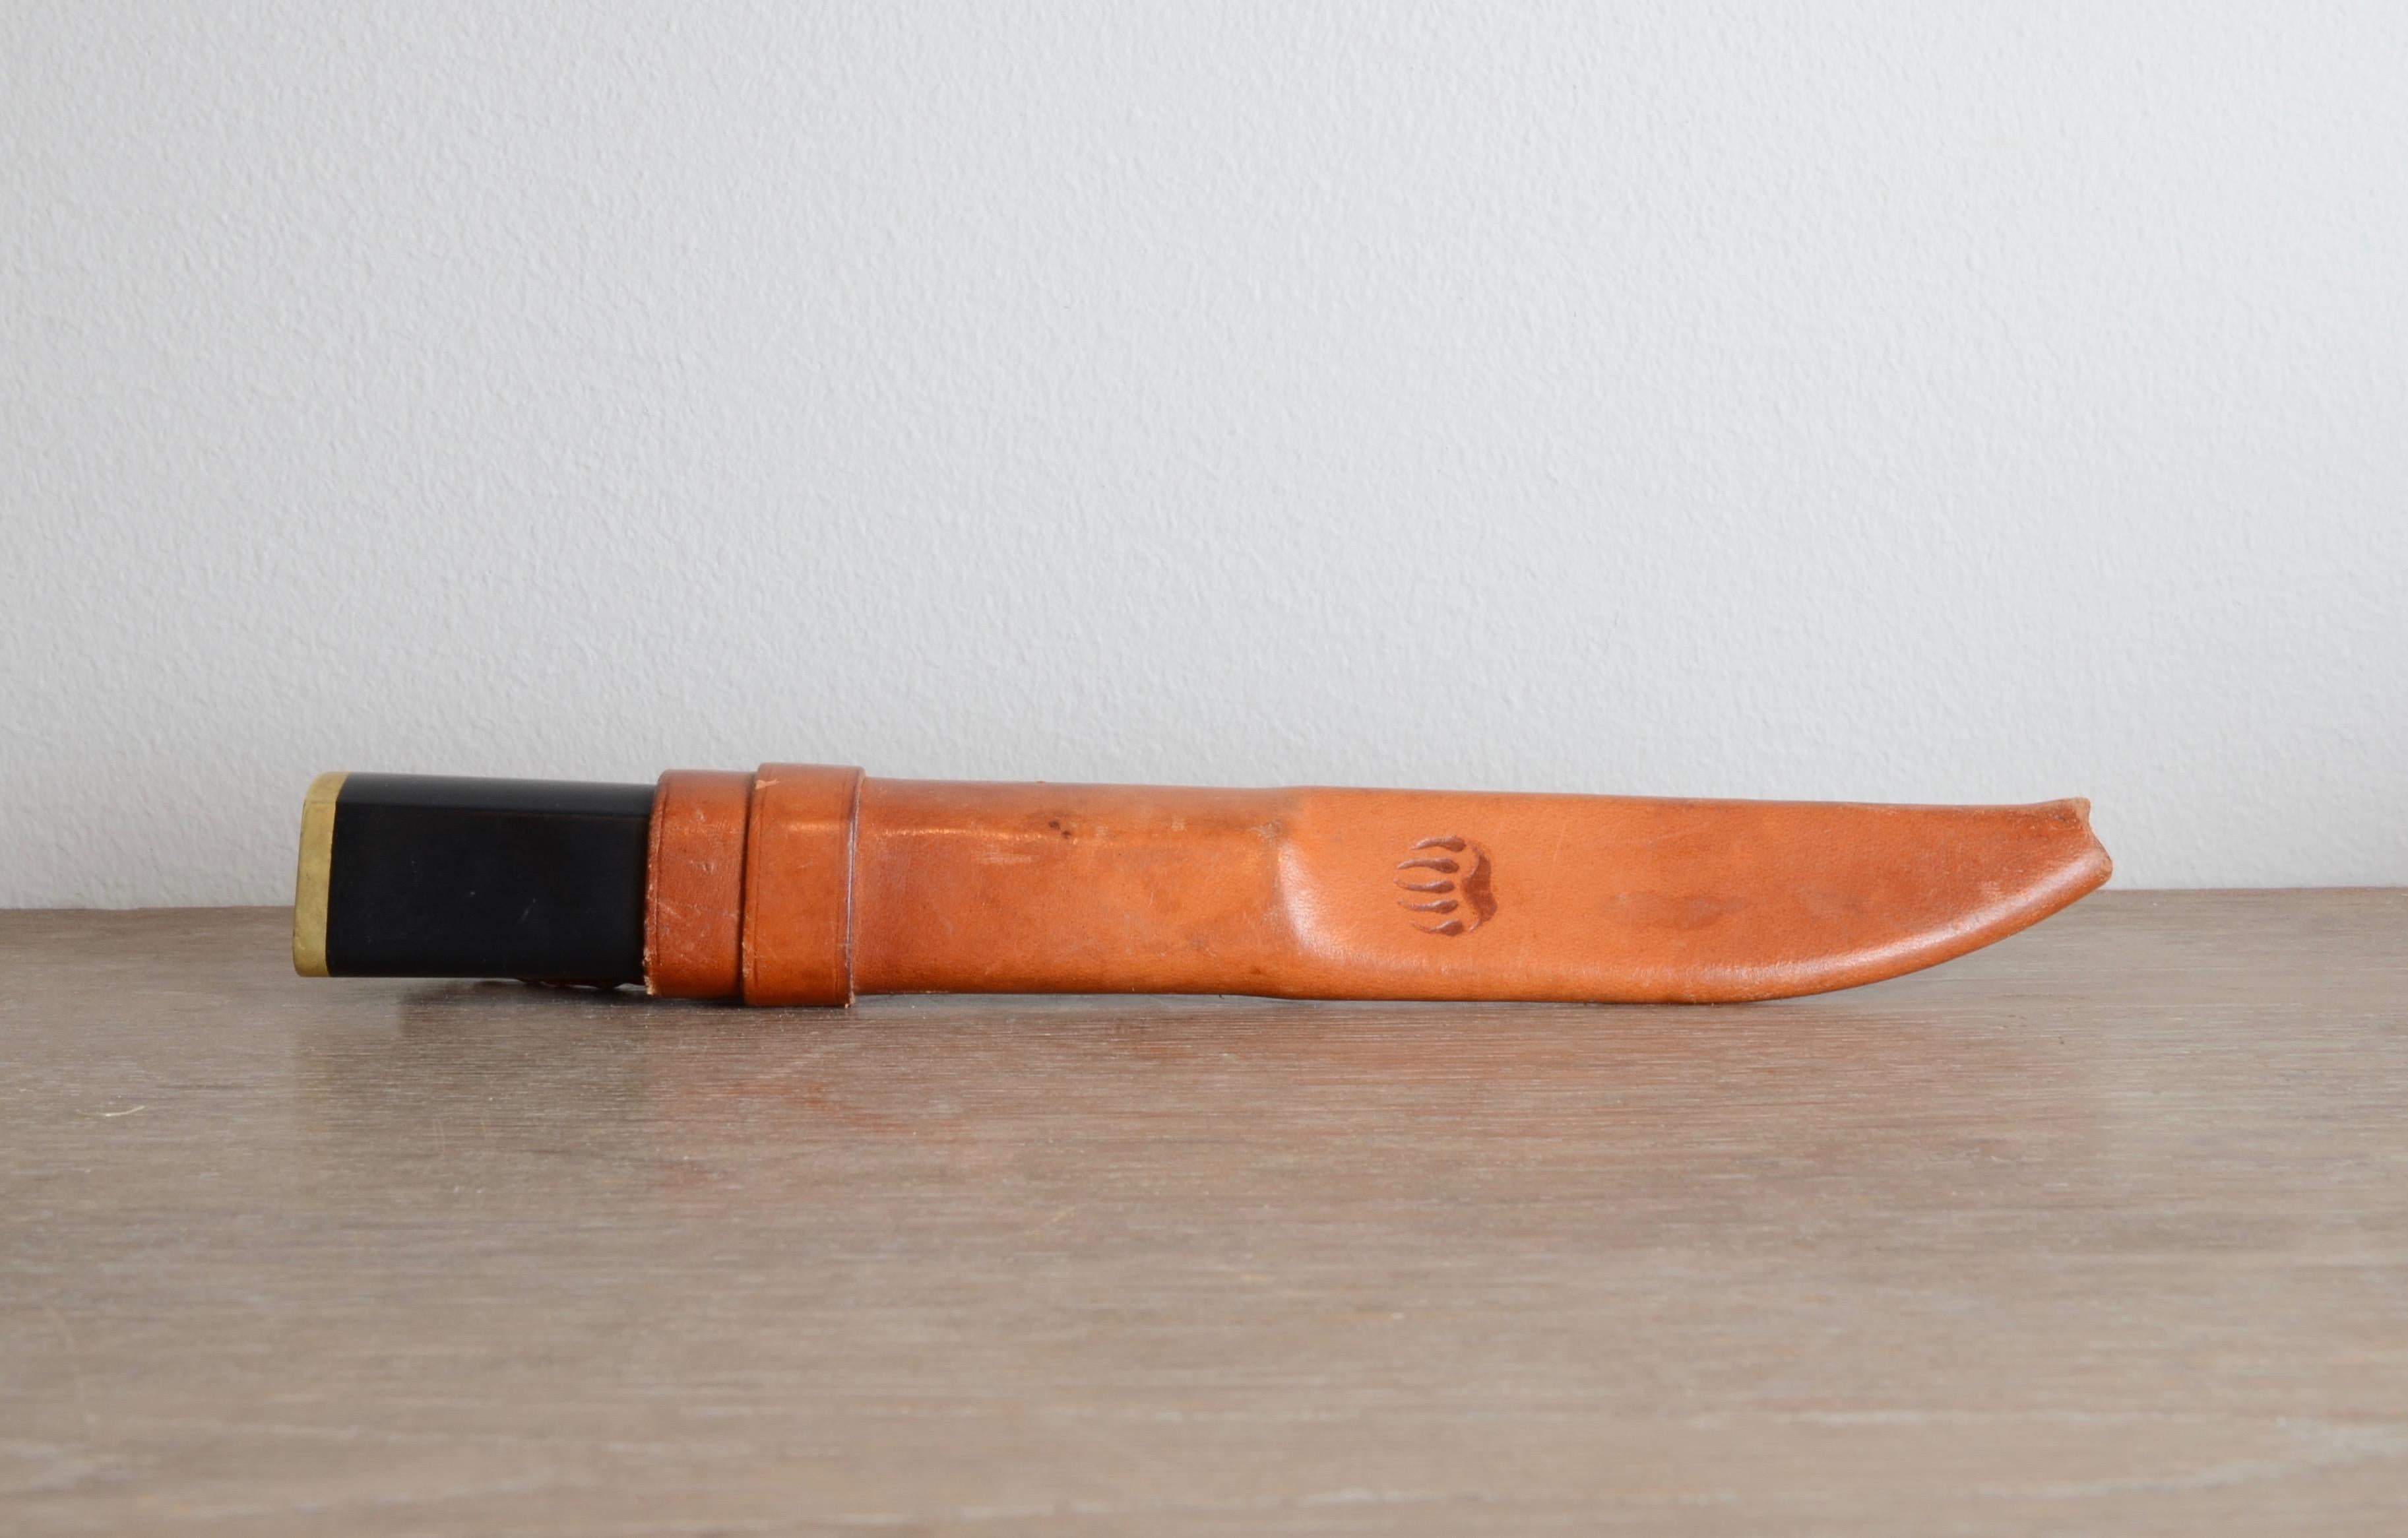 Knife with sheath model Puukko, designed by Tapio Wirkkala for Hackman & Co, Helsinki 1961. 

Steel blade, brass fittings, and leather sheath.